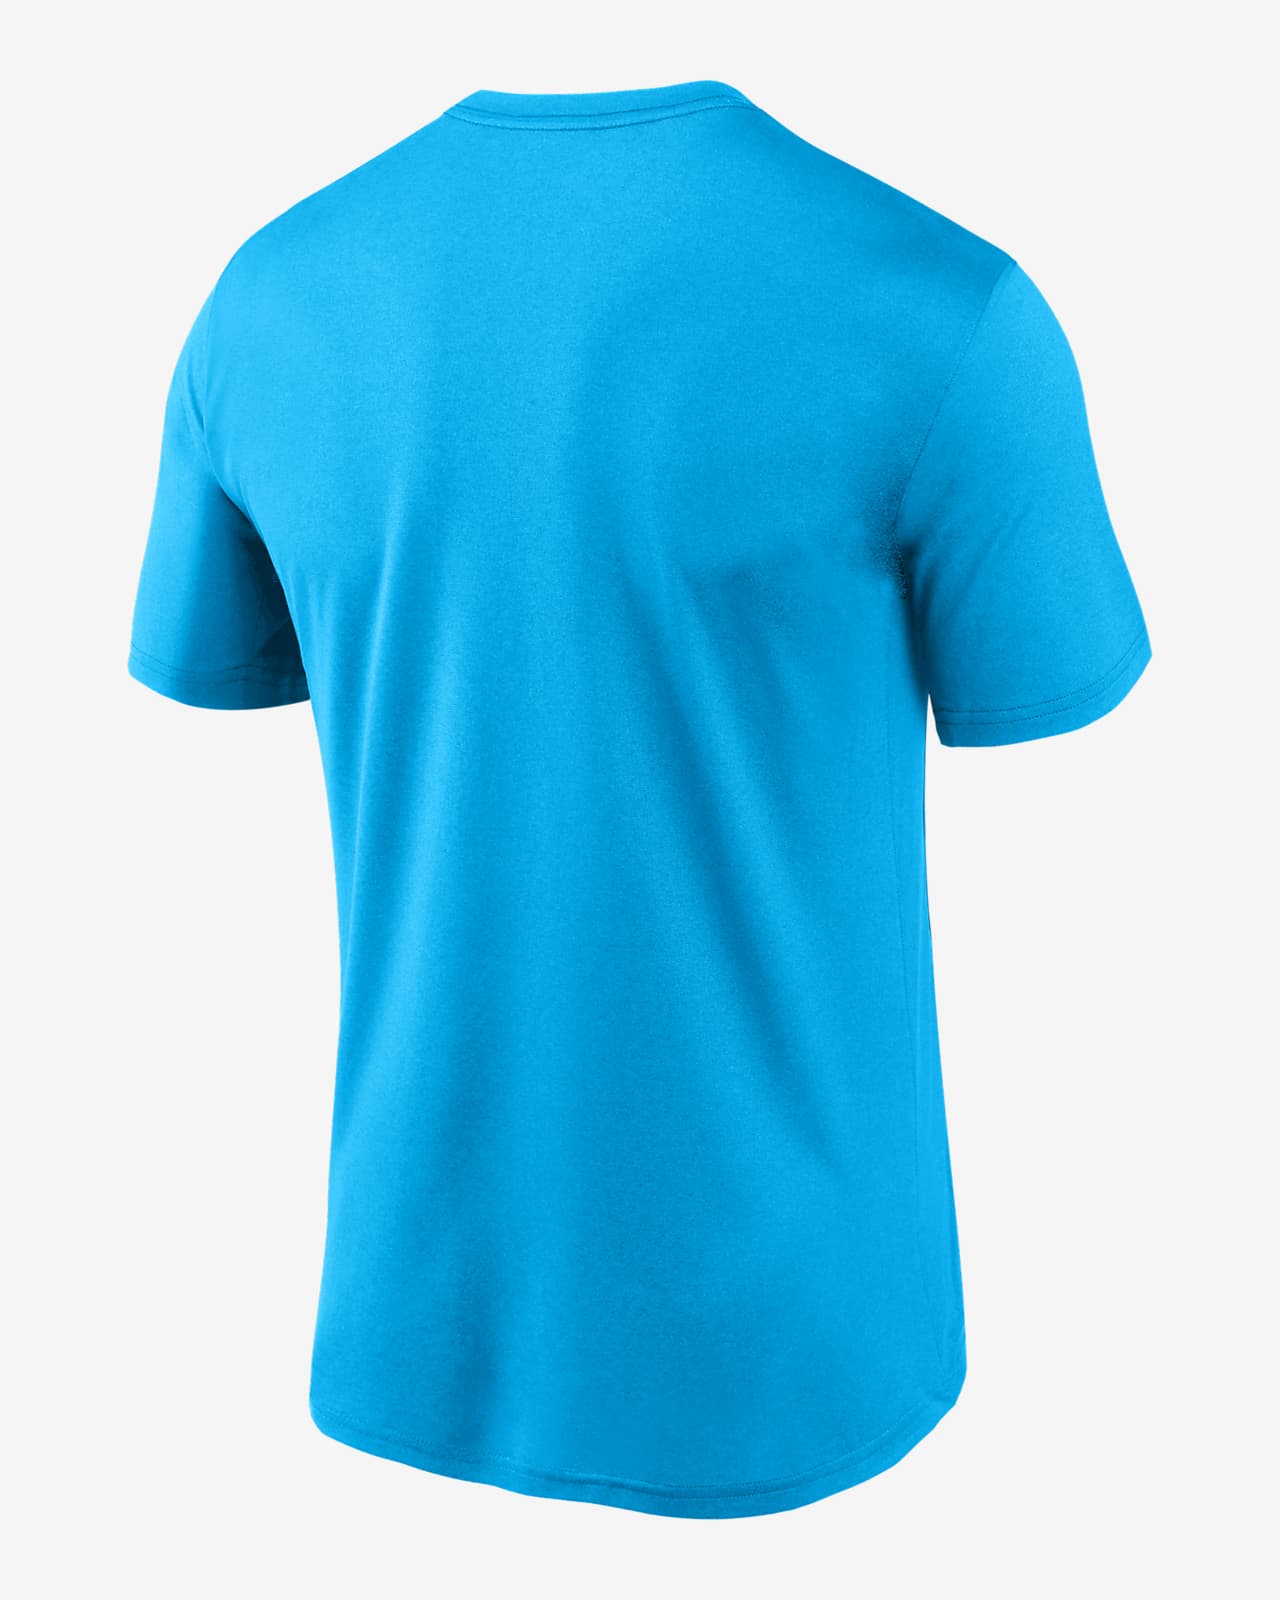 Miami Marlins Nike Dri-Fit Short Sleeve Shirt Men's Black Used L